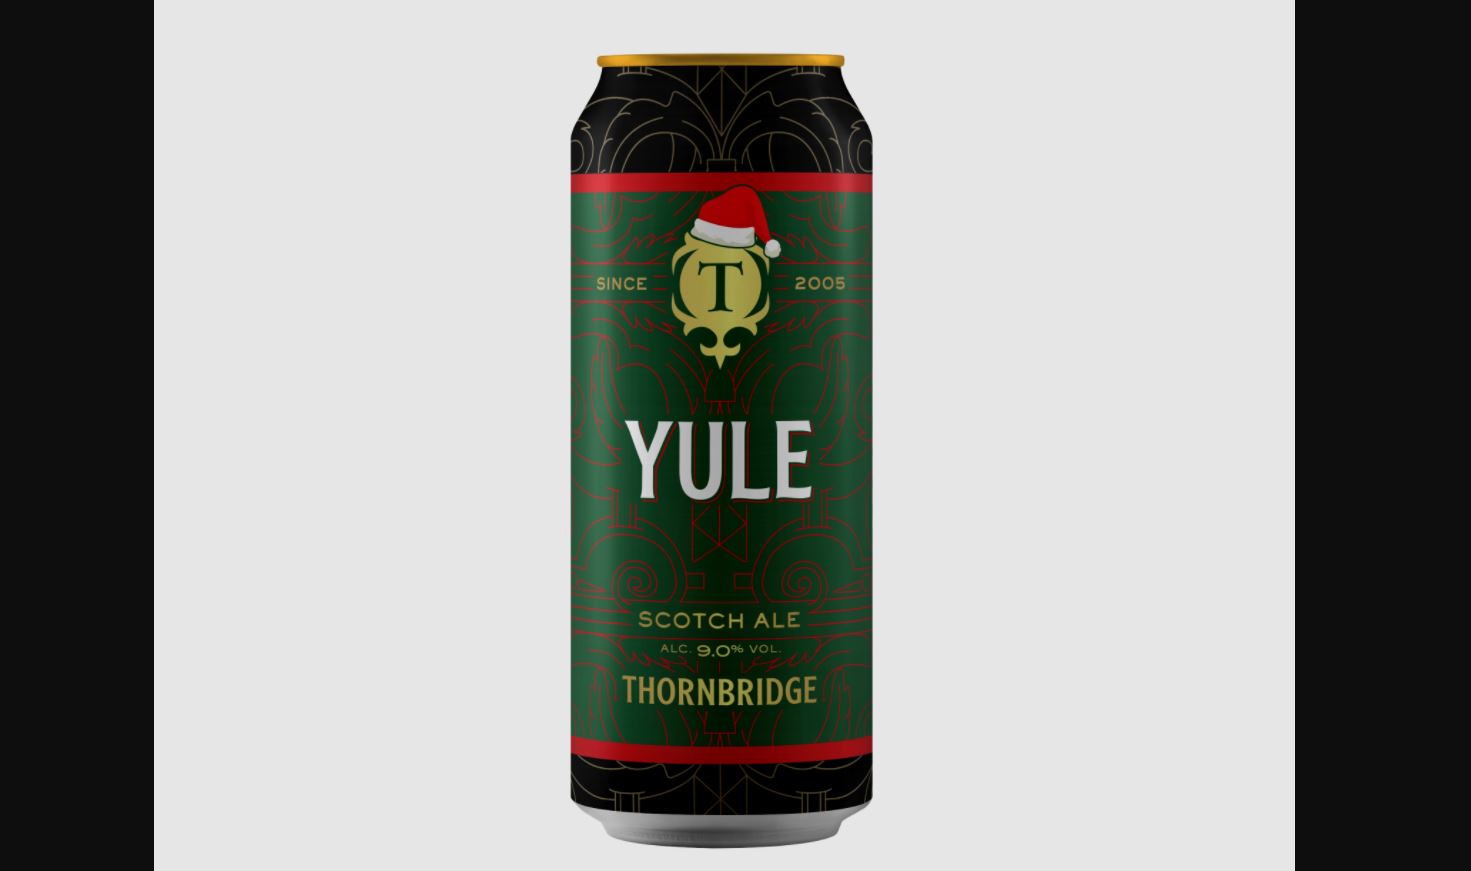 Thornbridge Yule Scotch Ale